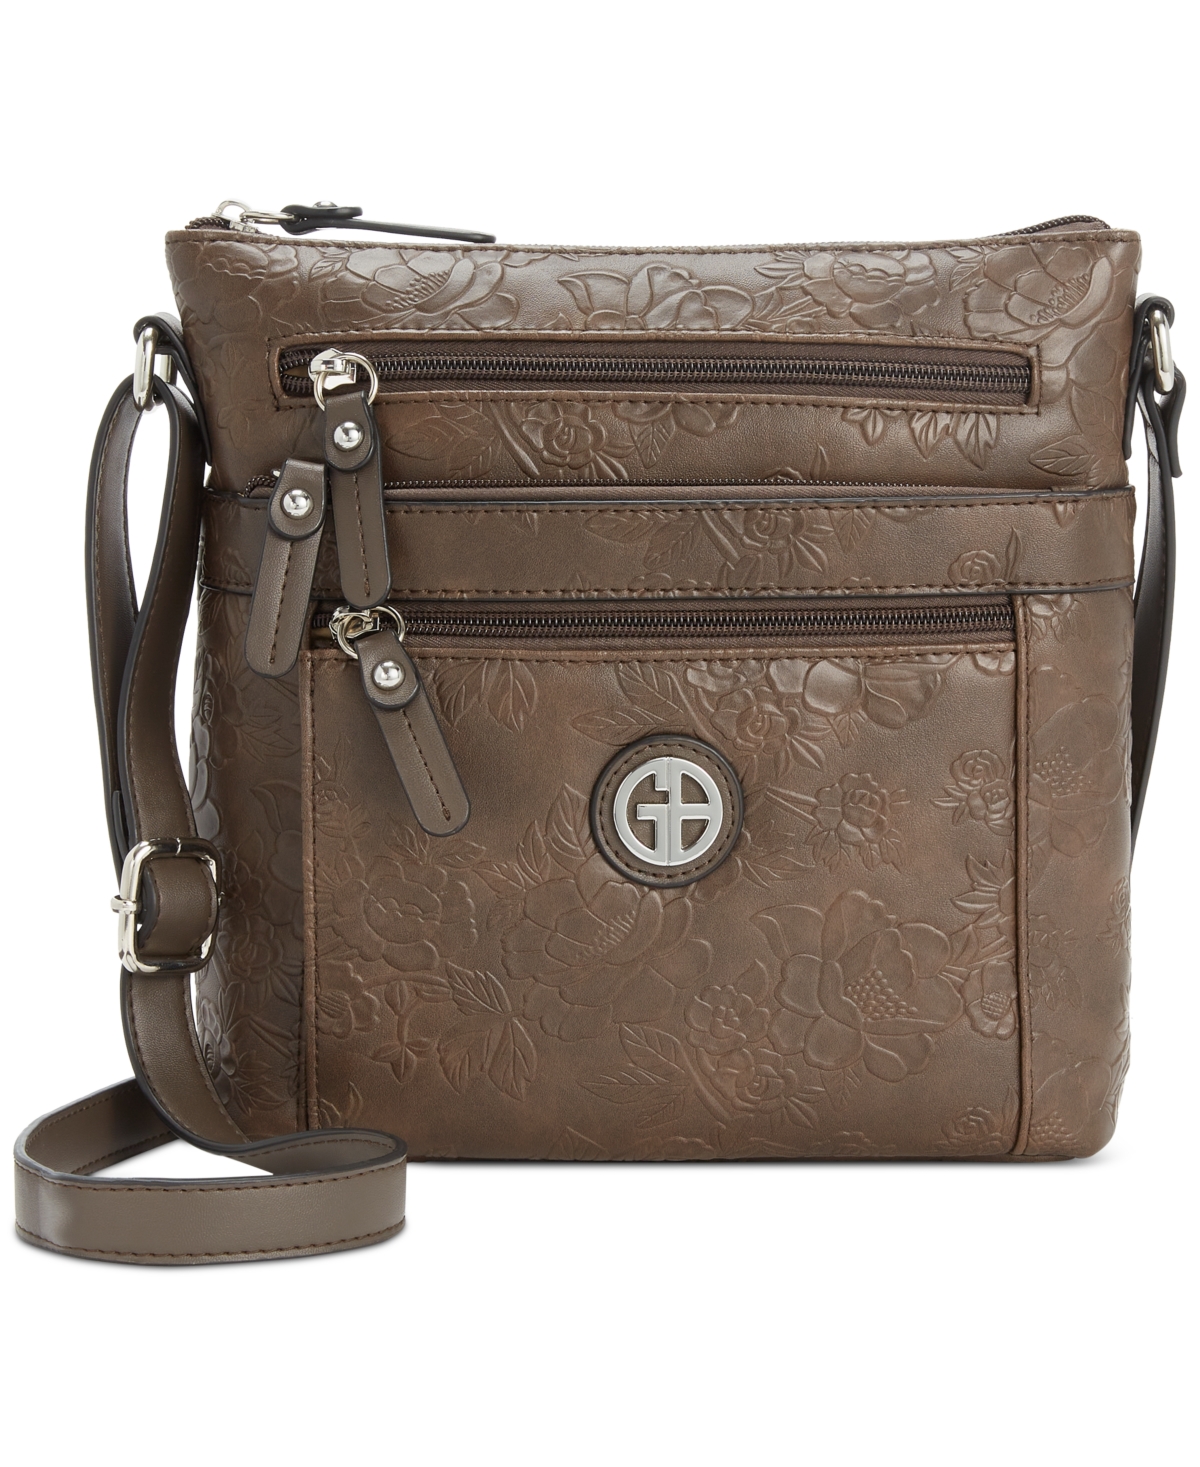 Giani Bernini Beige Leather Tote Handbag Purse – Trend4friends